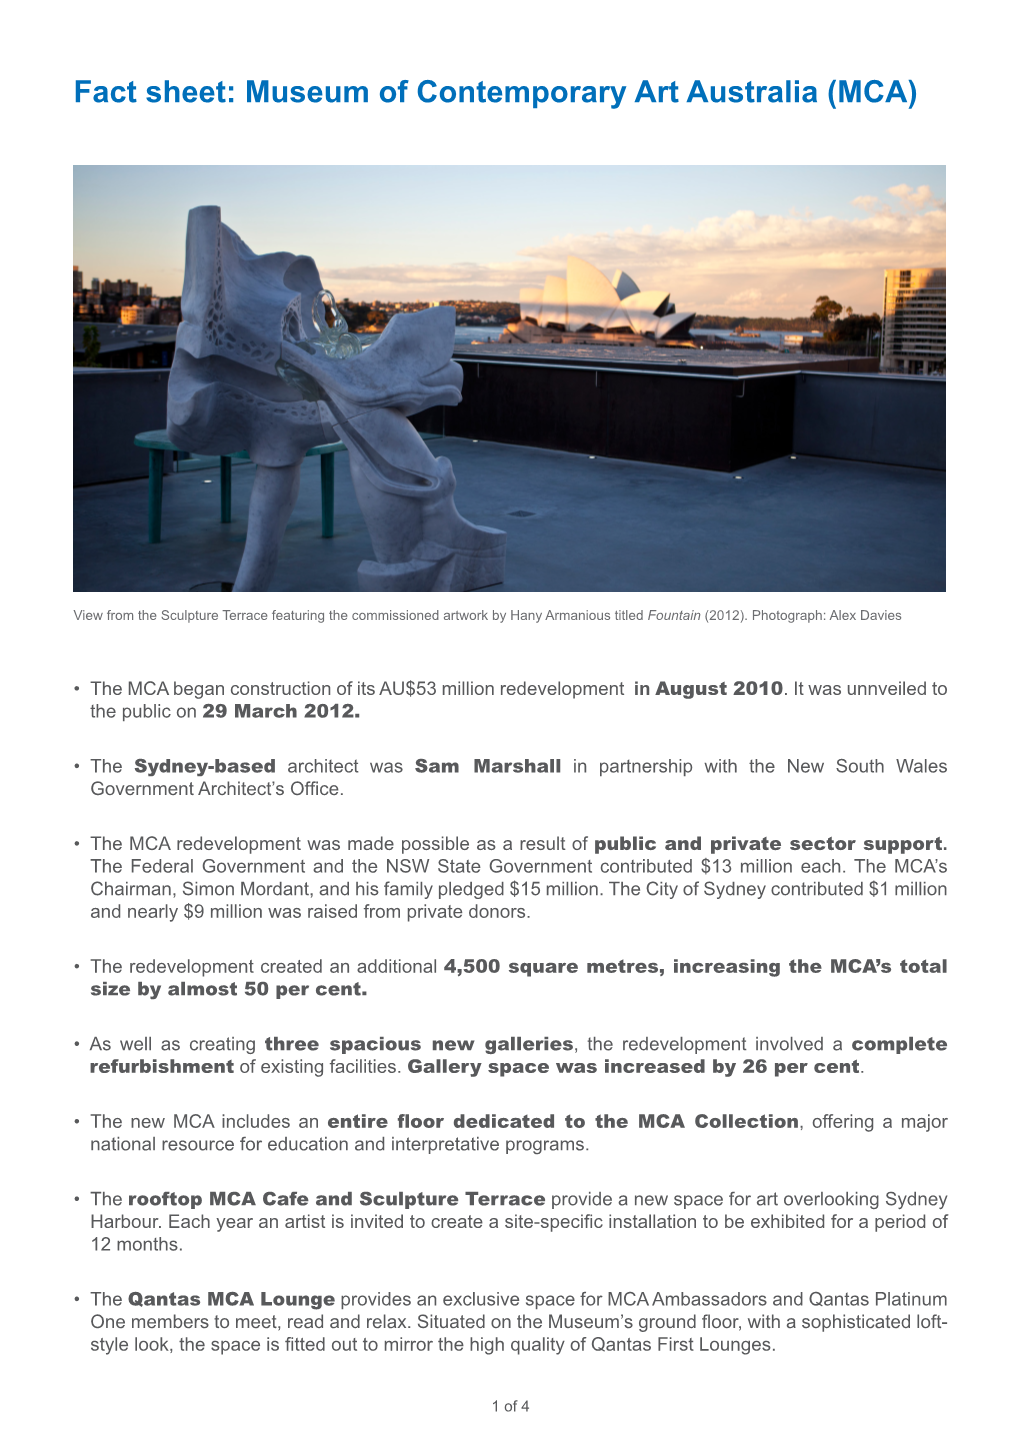 Fact Sheet: Museum of Contemporary Art Australia (MCA)